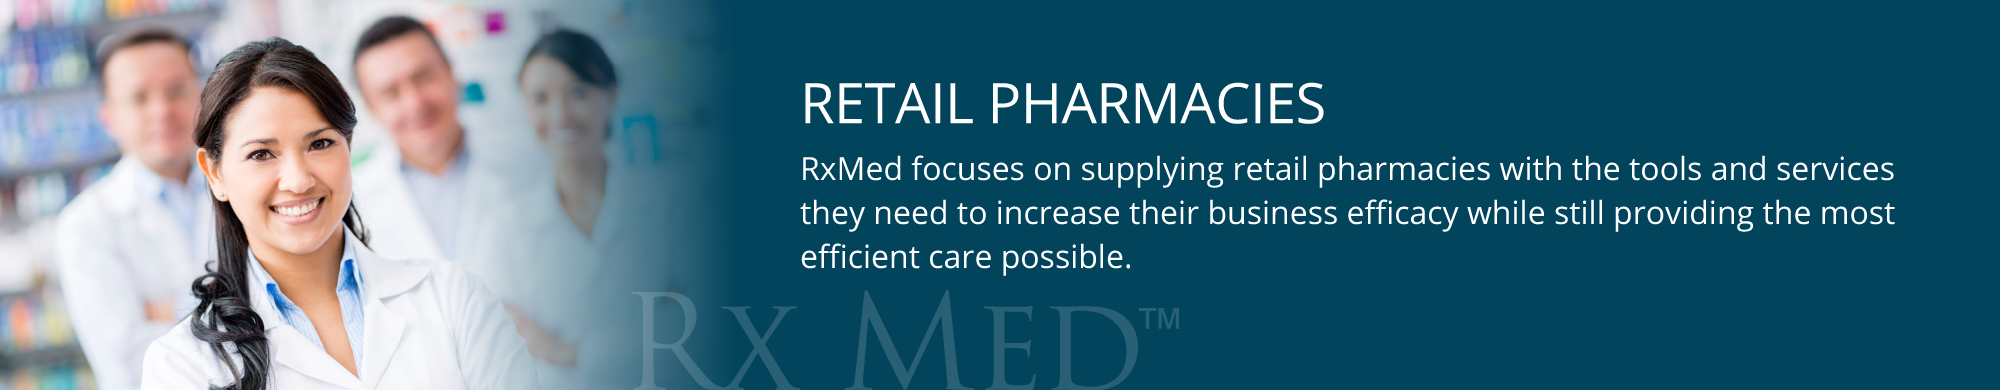 Retail Pharmacies